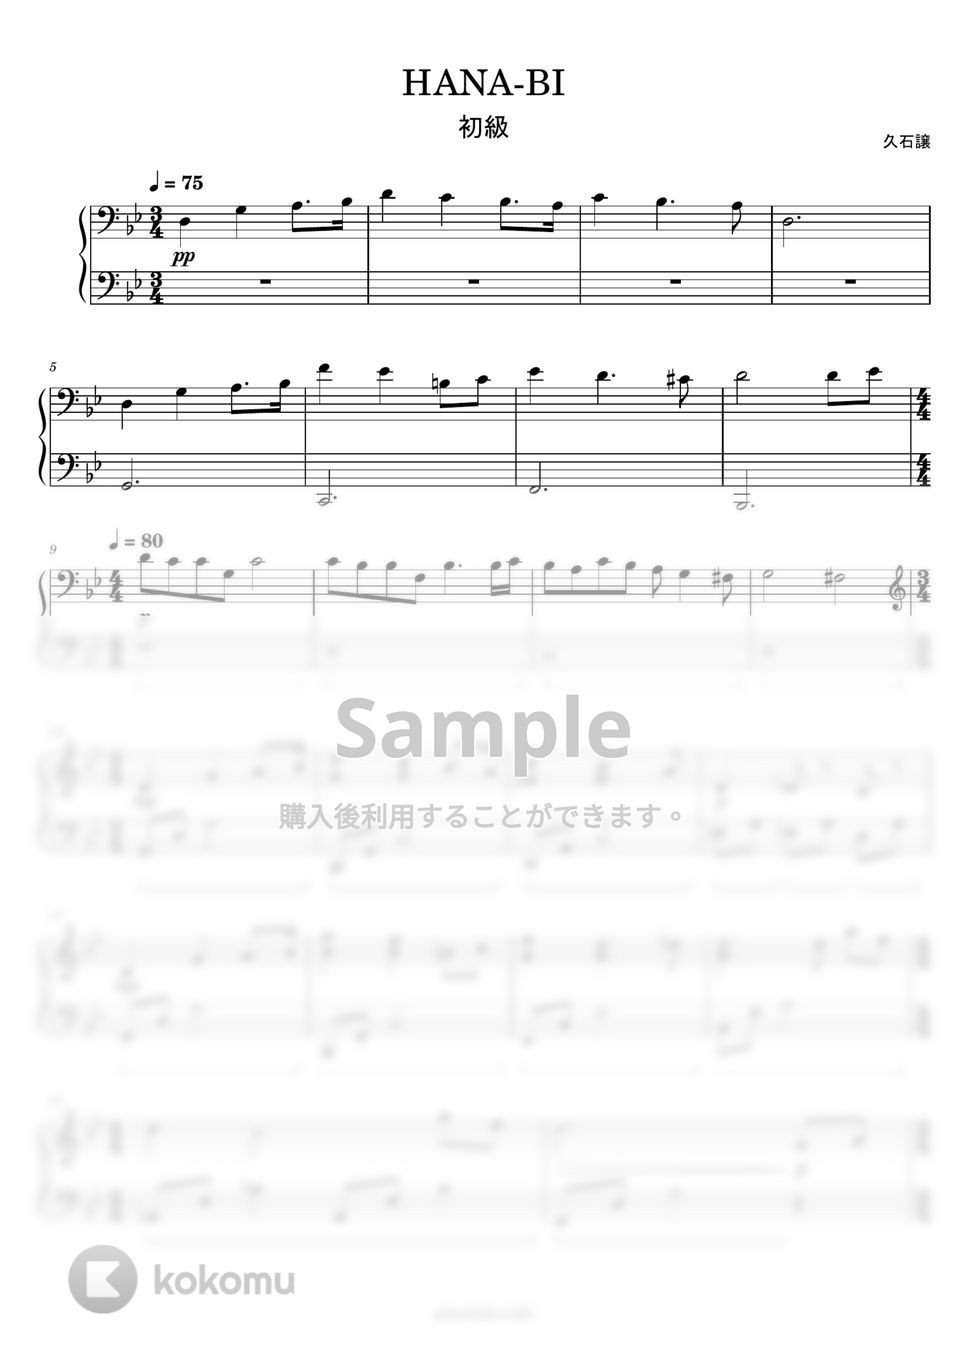 久石譲 - HANA-BI (簡単楽譜) by ピアノ塾